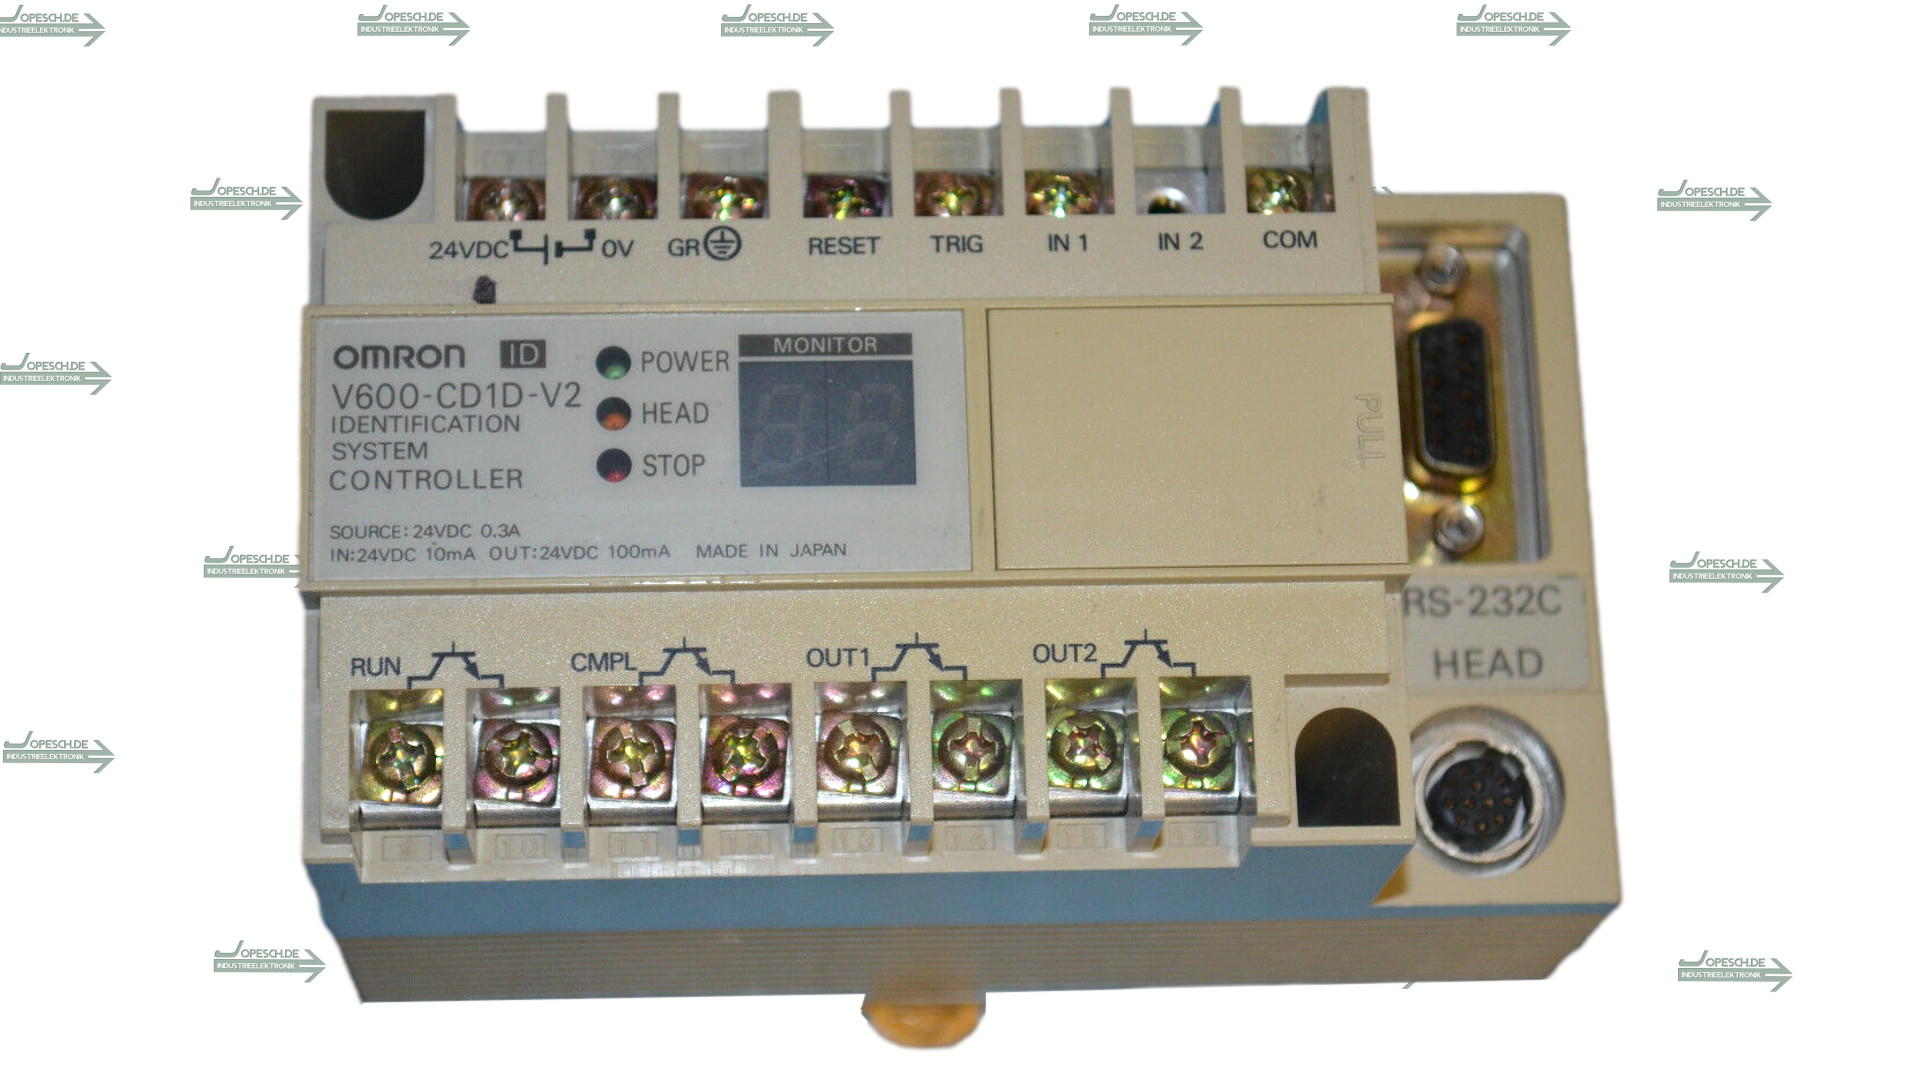 OMRON V600 Identification System Controller V600-CD1D-V2